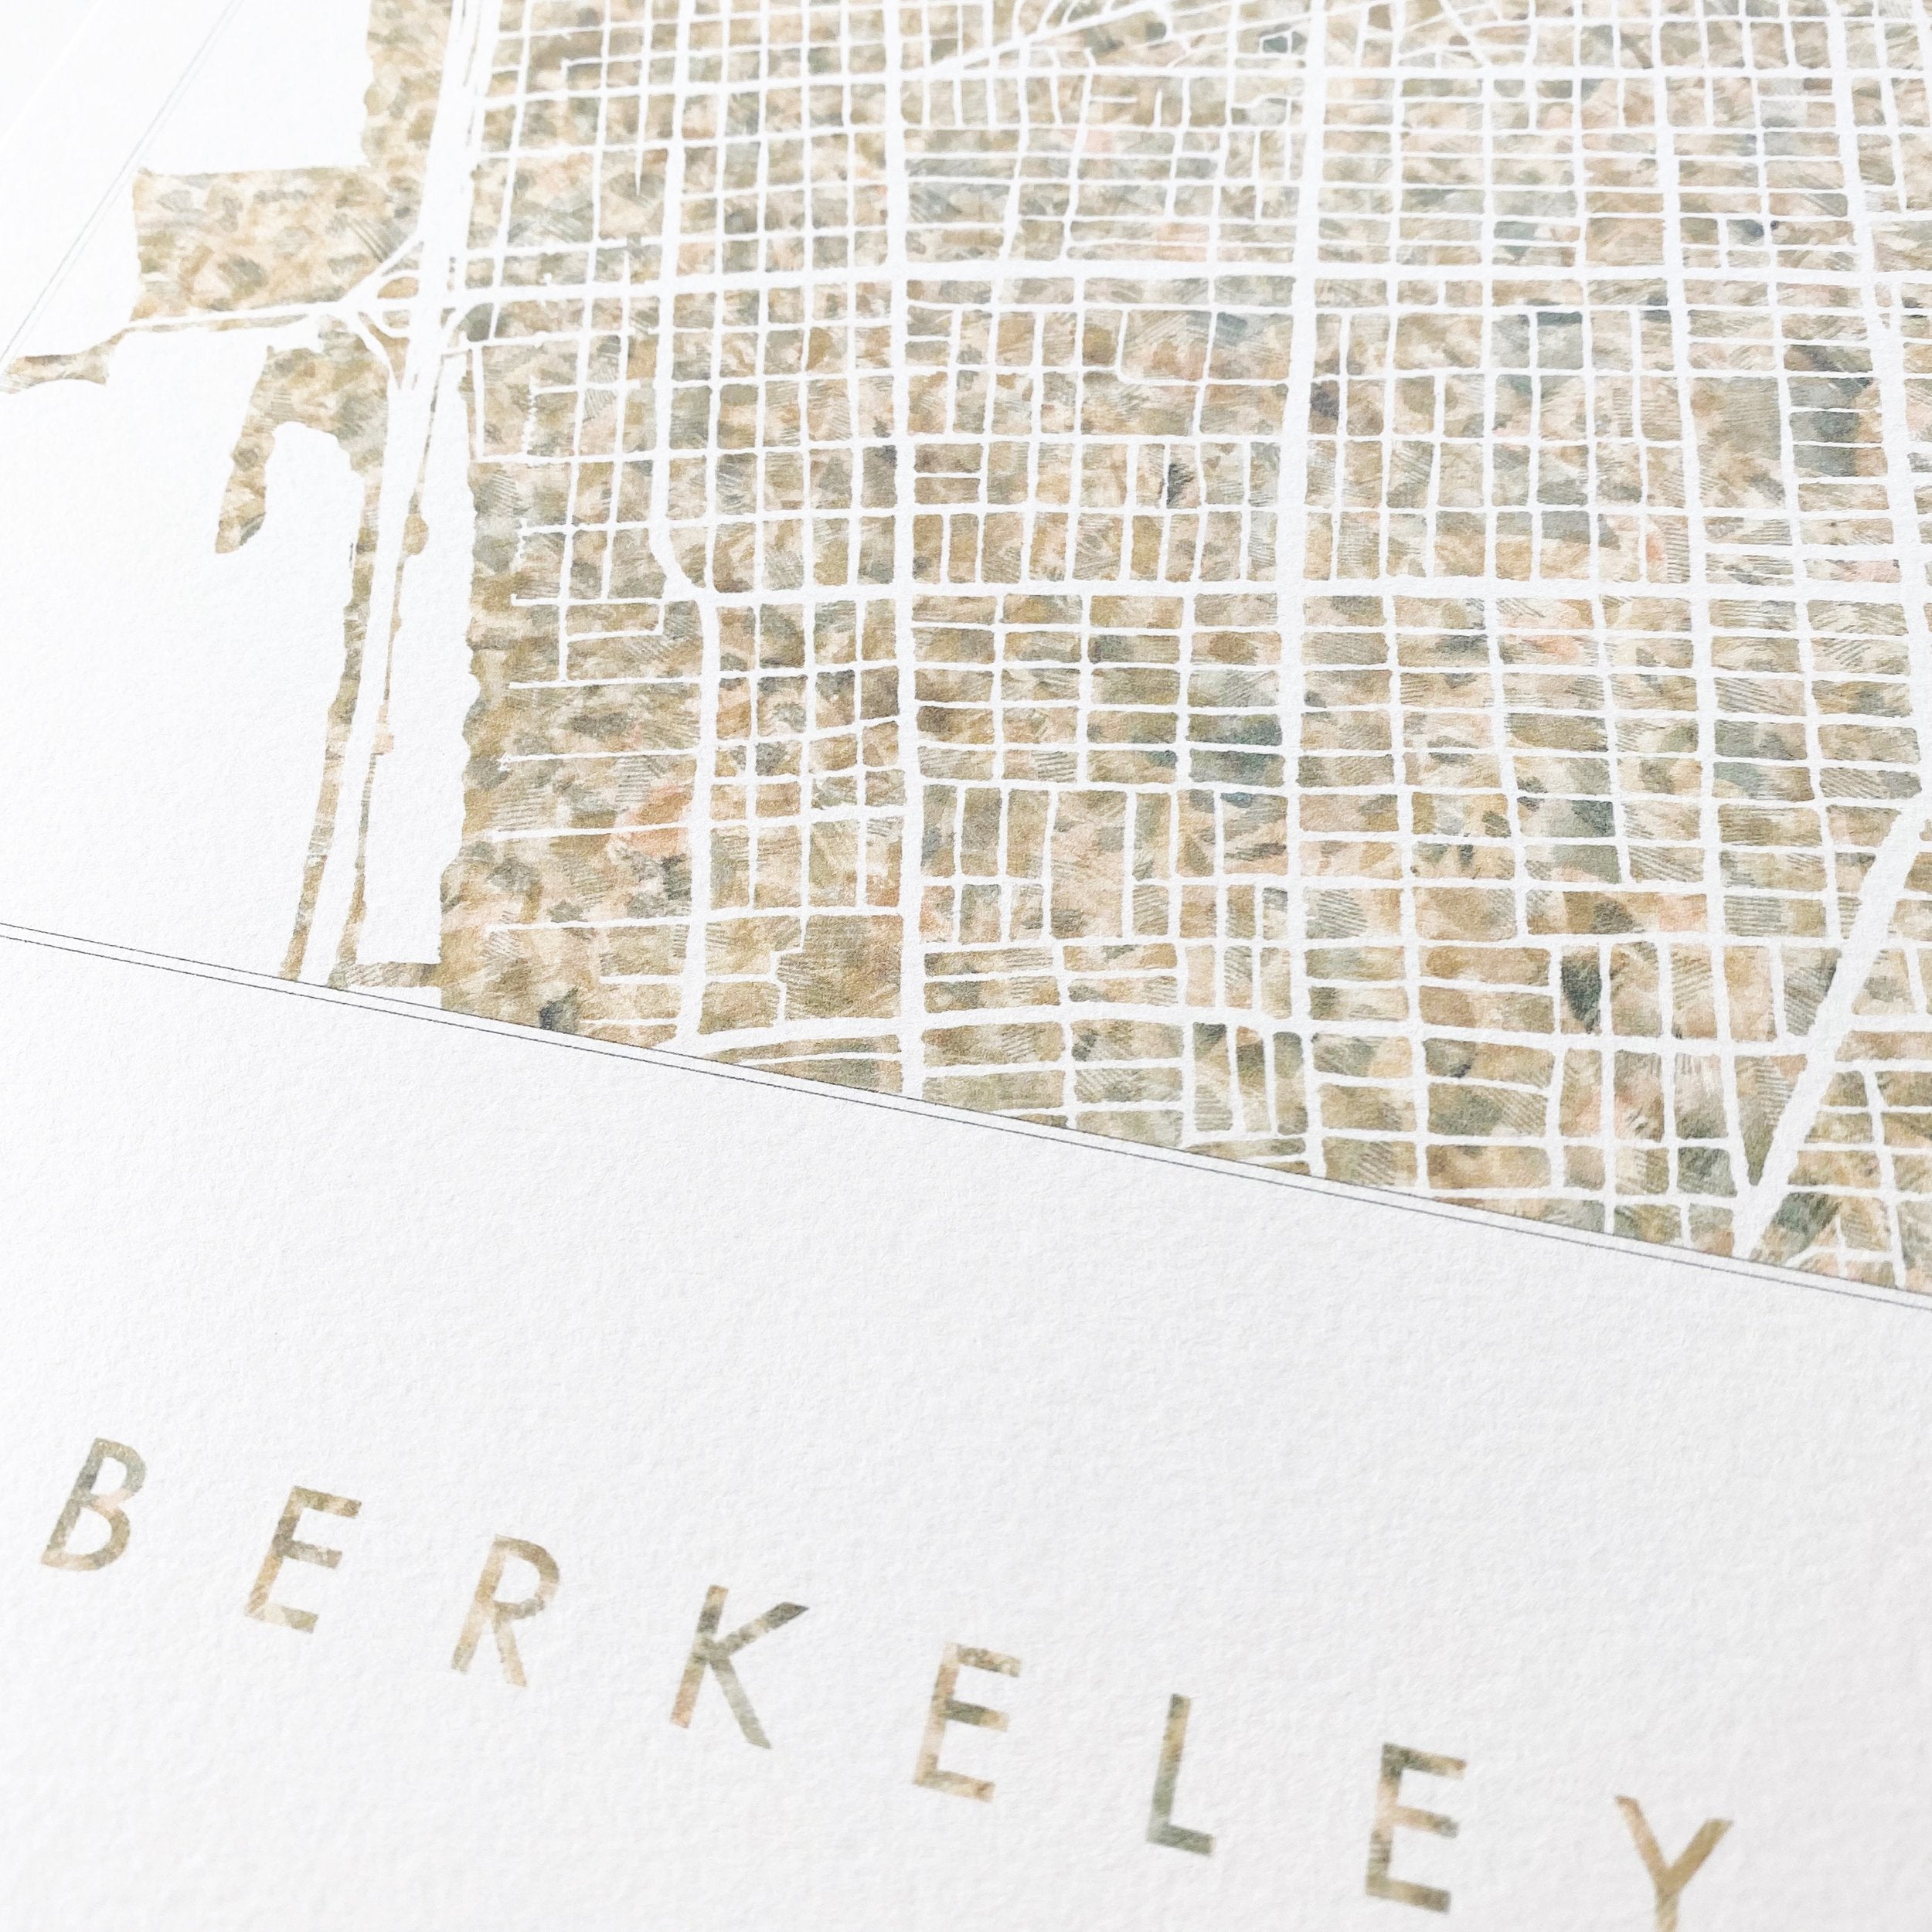 BERKELEY Urban Fabrics City Map: PRINT